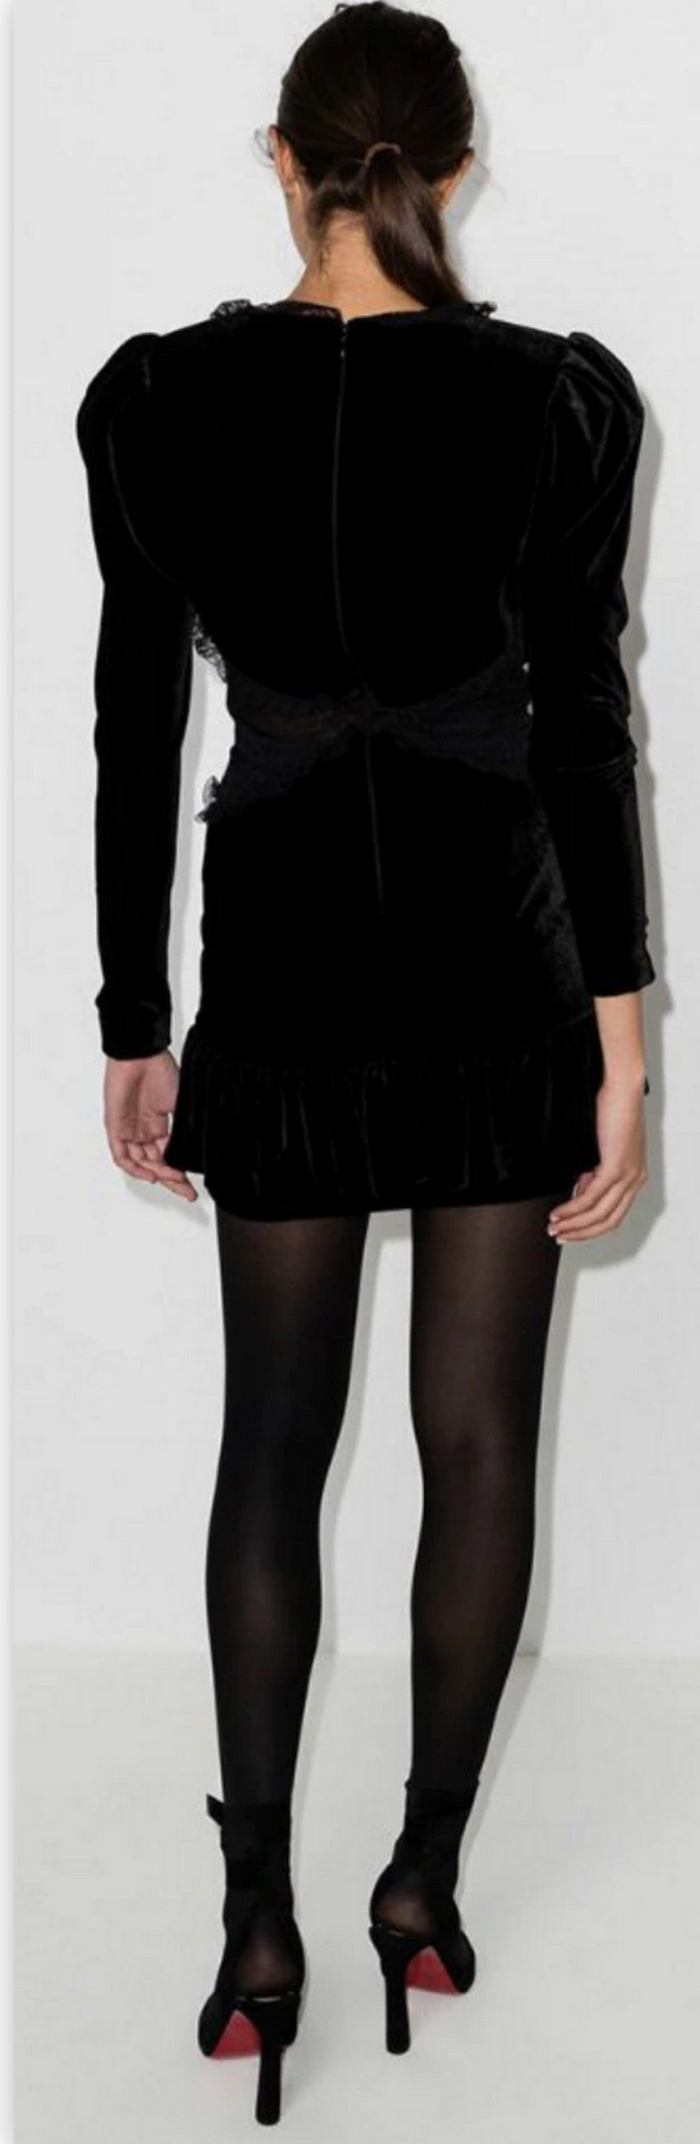 Black Lace-Embellished Mini Dress Inspired Fashions Boutique